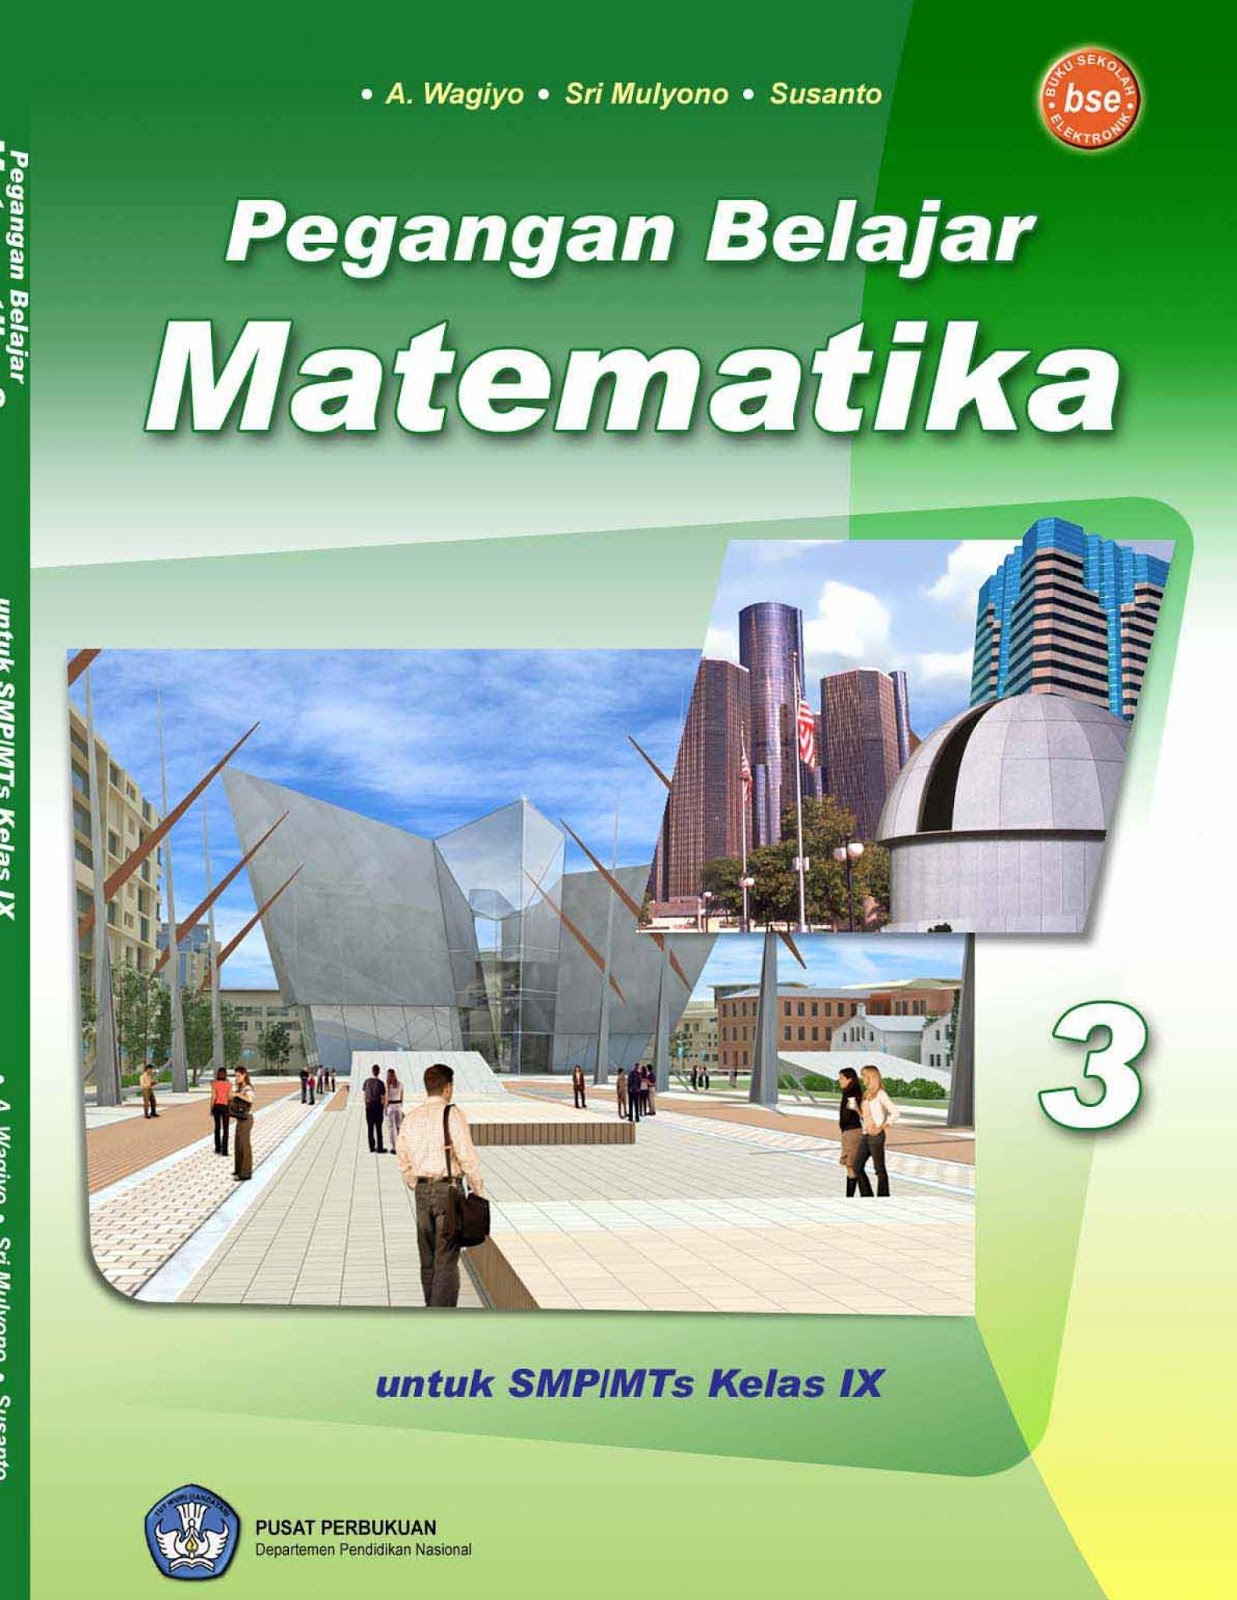 Buku Bacaan Matematika Kelas 9 oleh A Wagiyo Sri Mulyono dan Susanto